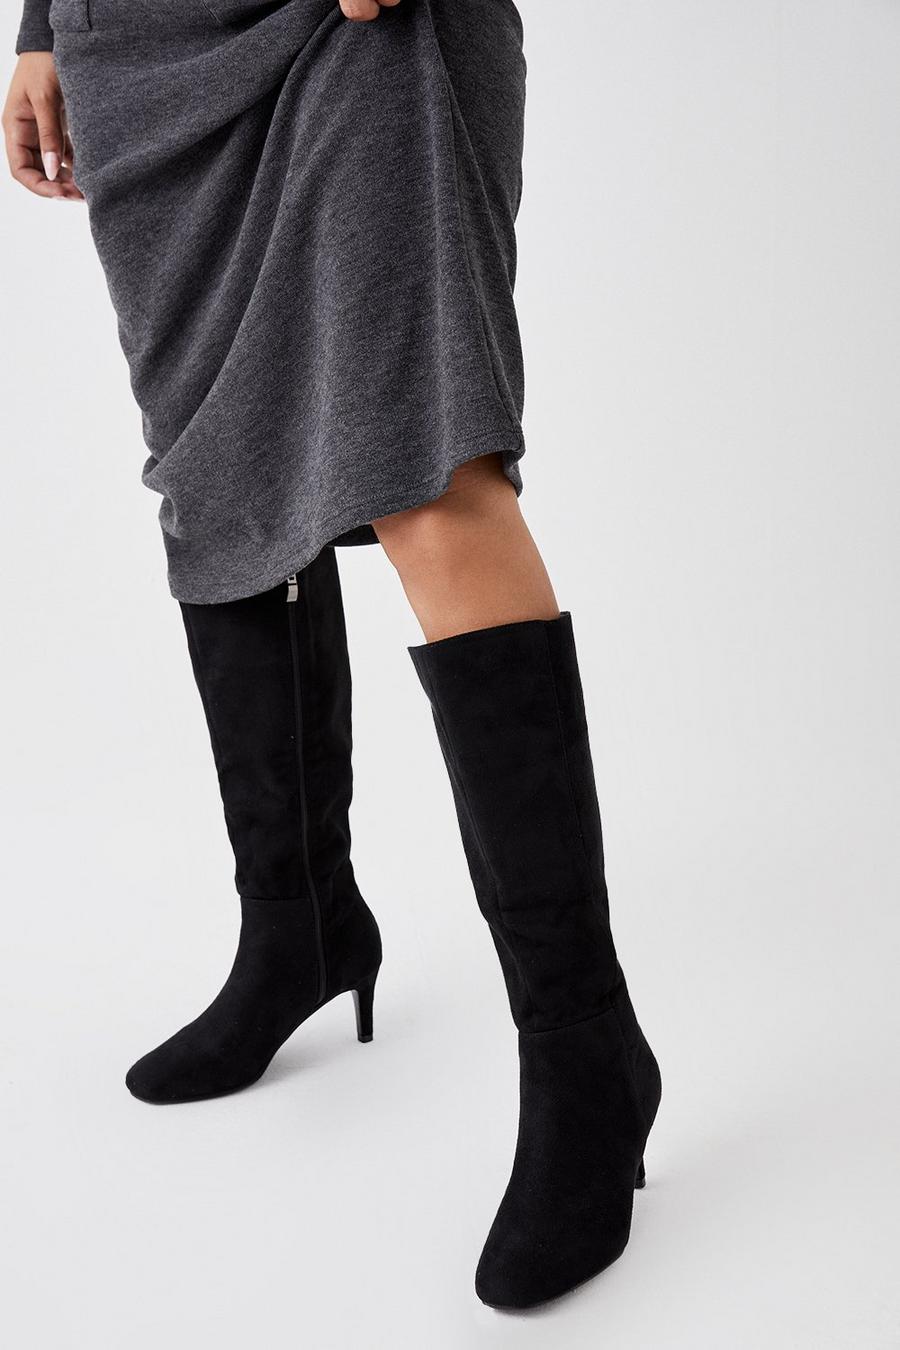 Heidi Stretch Almond Toe Medium Heel Knee Boots